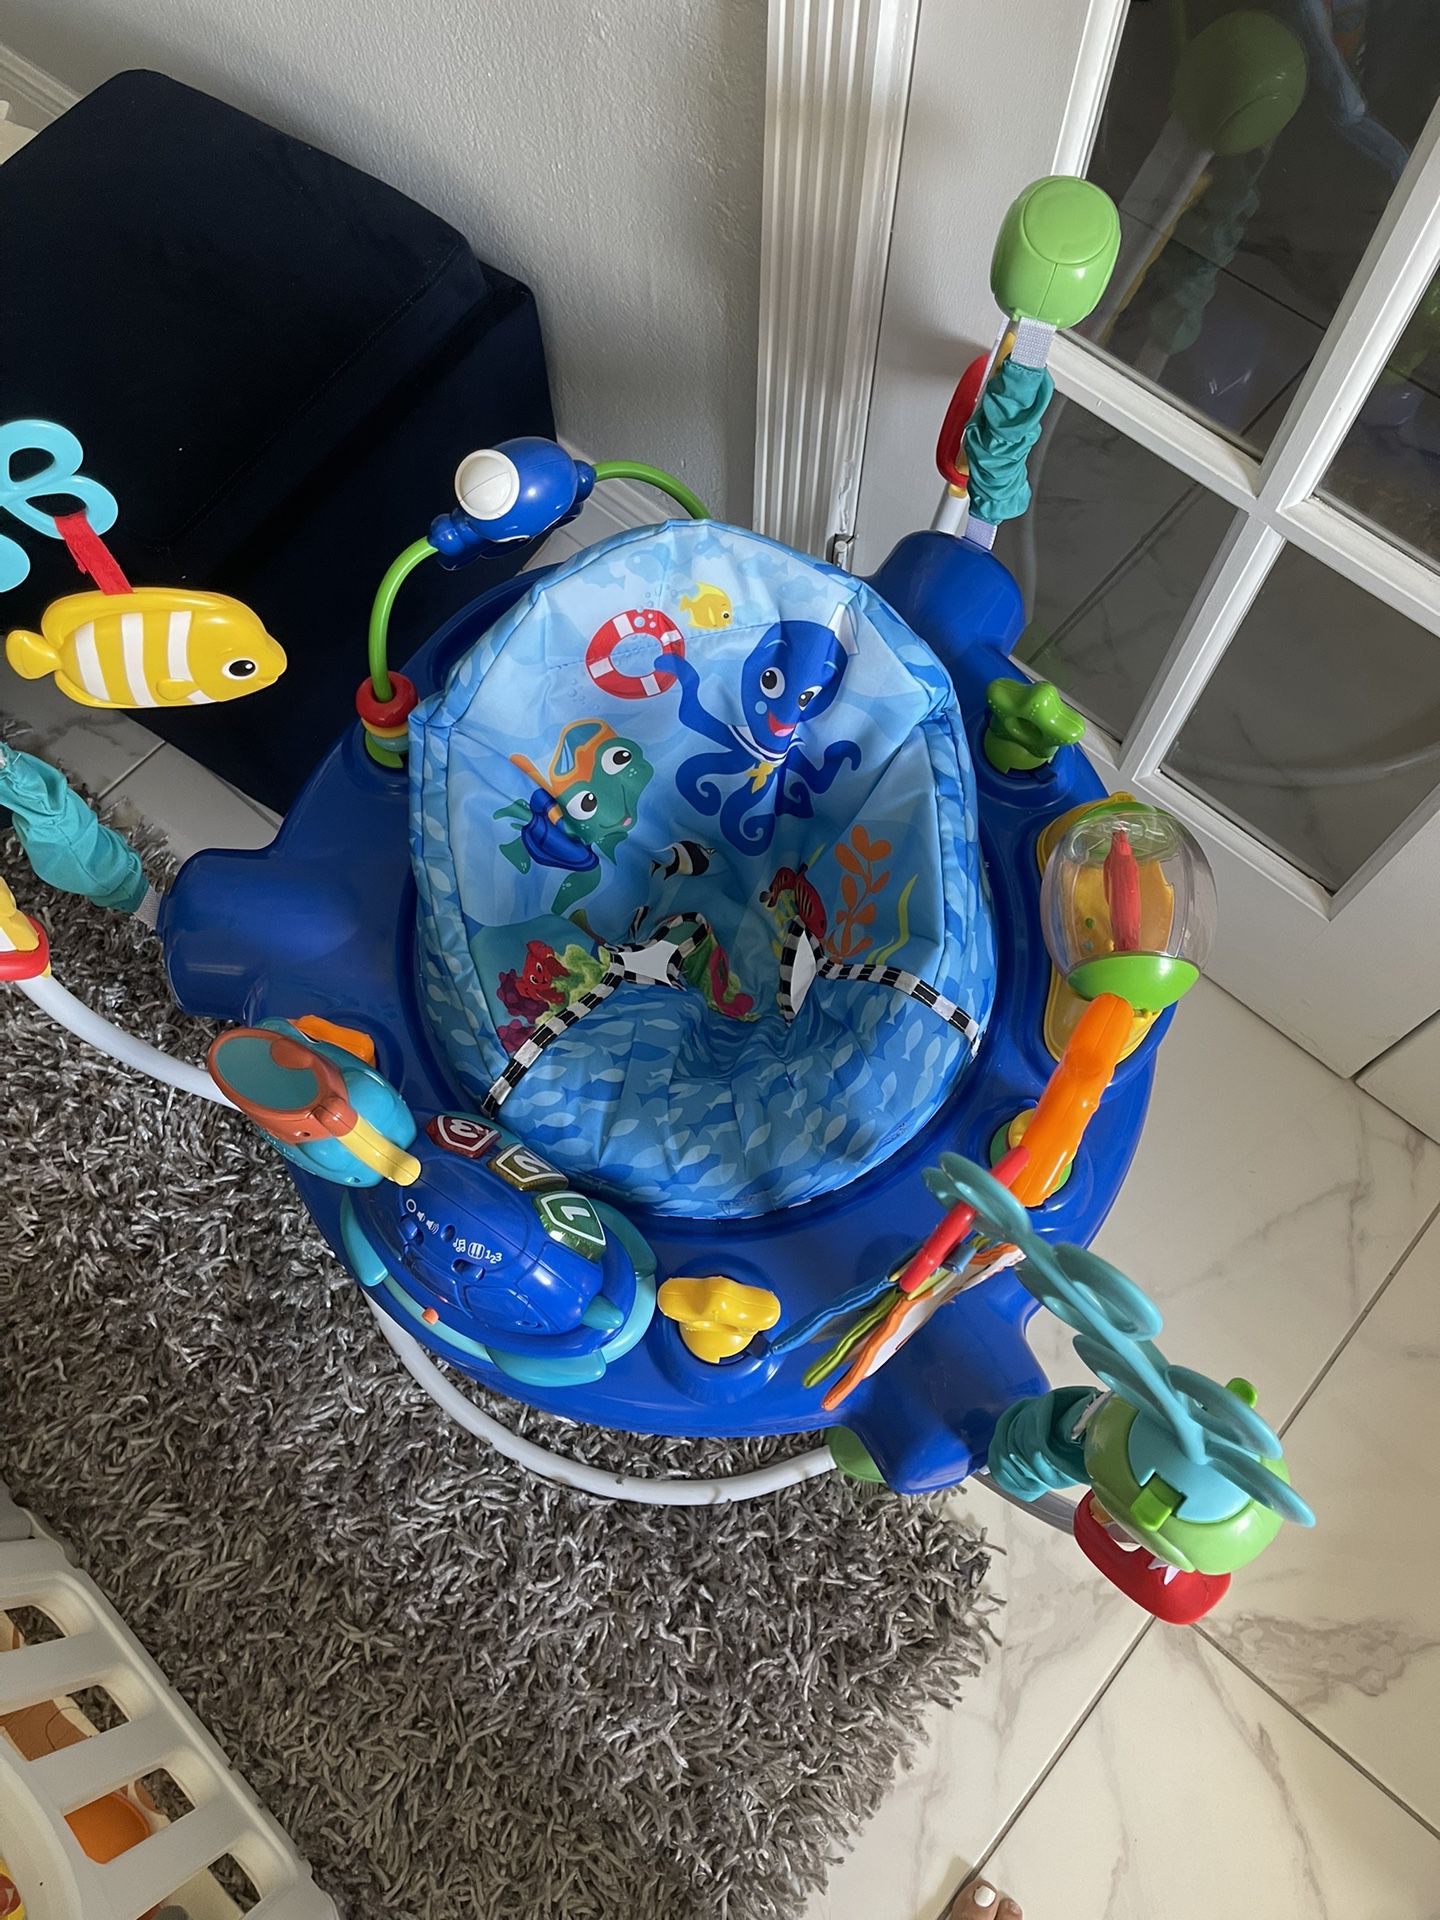 Baby Jumper (saltarín Para Bebe) for Sale in Hialeah, FL - OfferUp